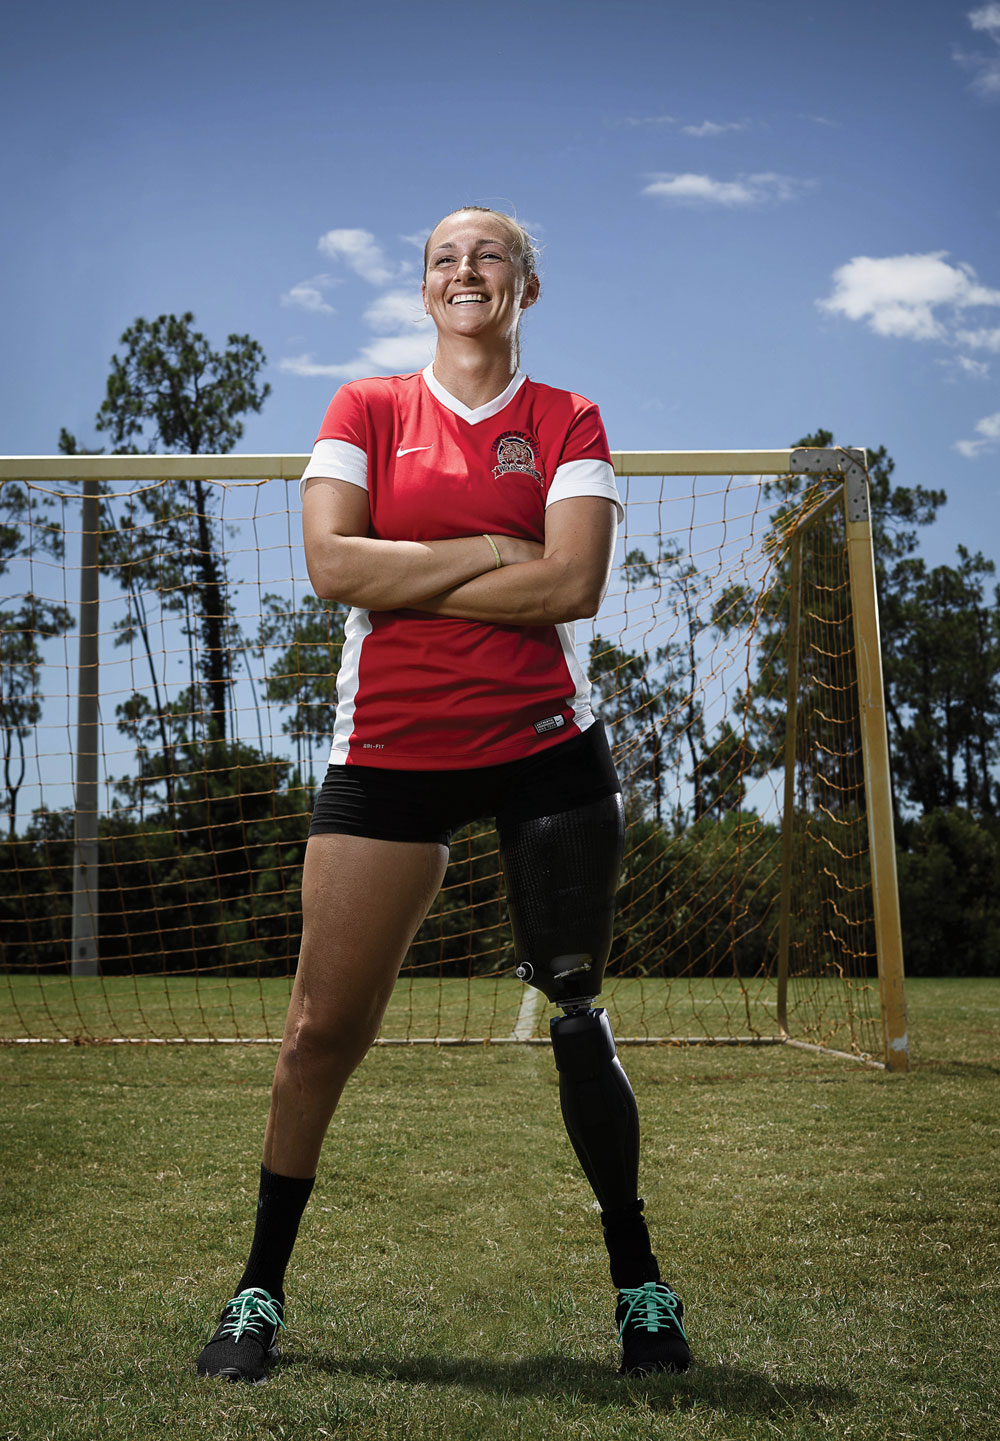 adaptive sports athlete soccer player bree